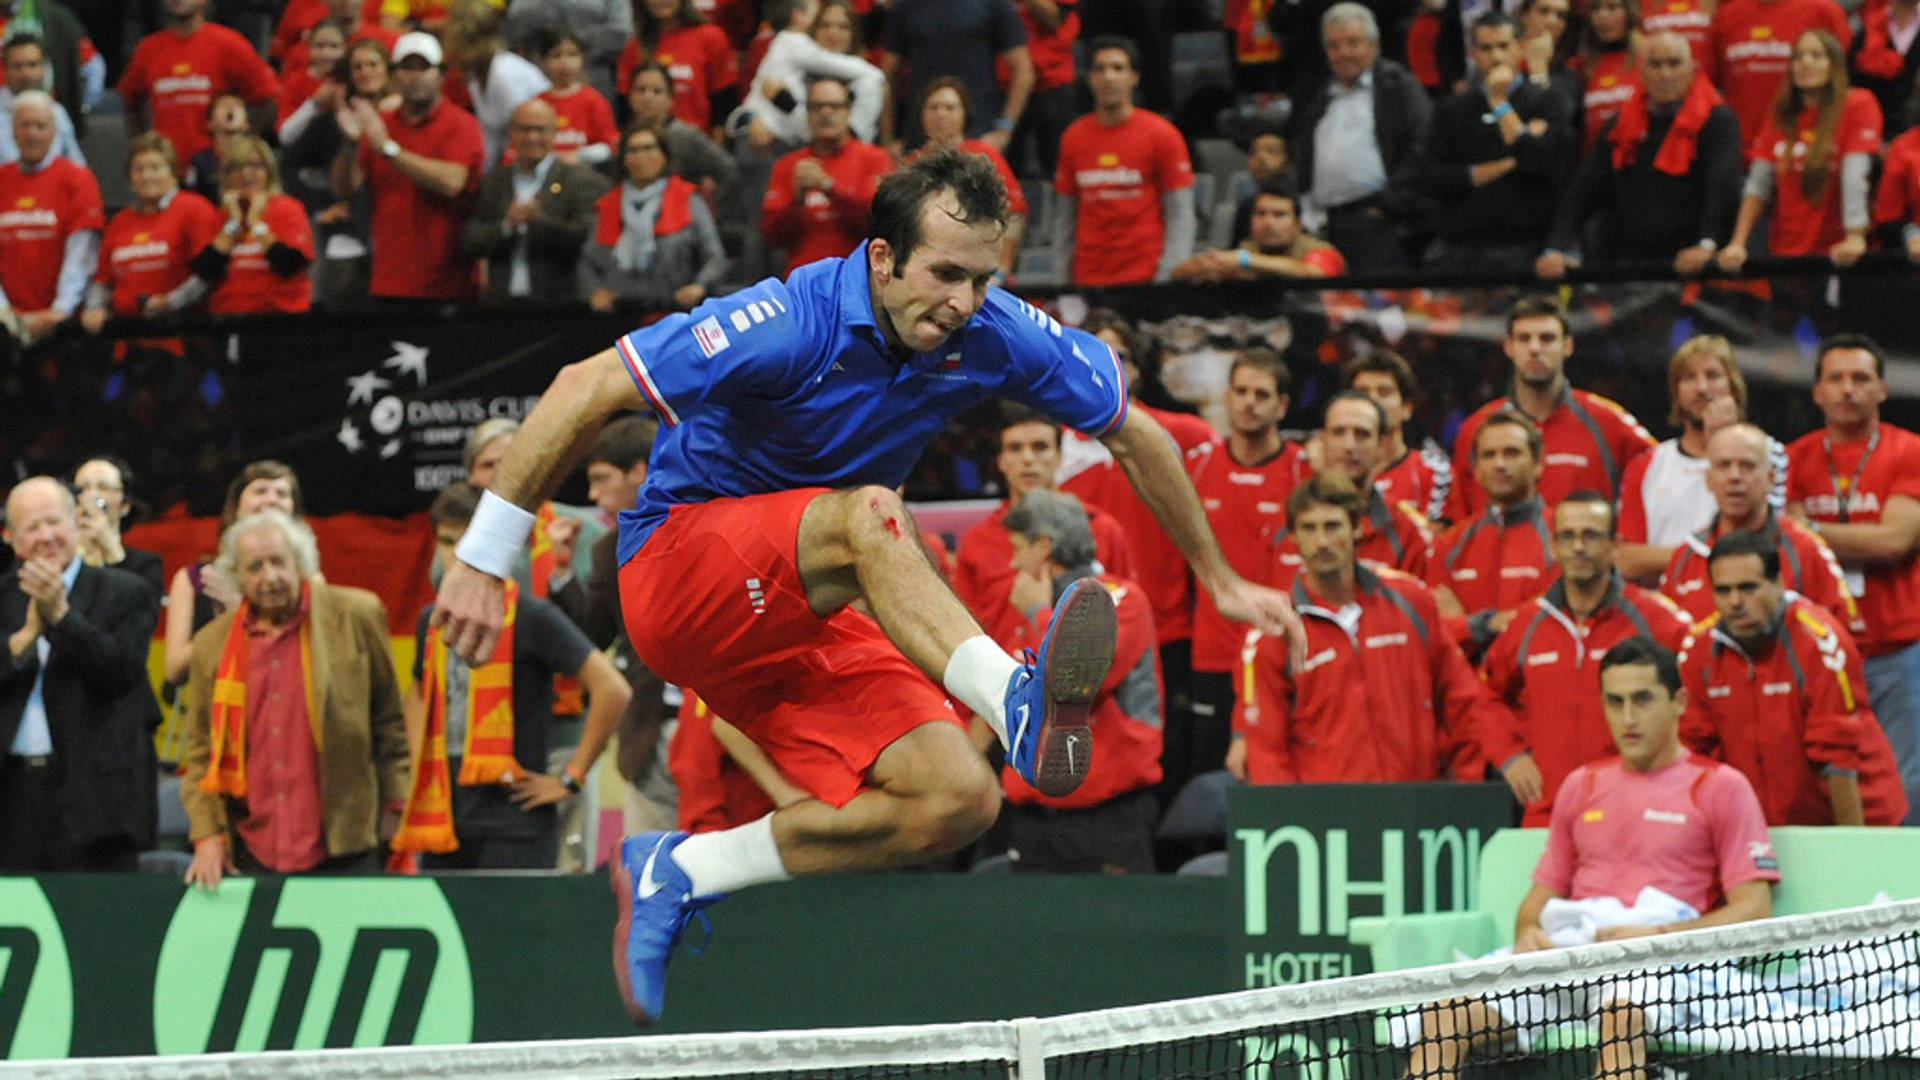 Radek Stepanek Jumping Over Tennis Net Wallpaper